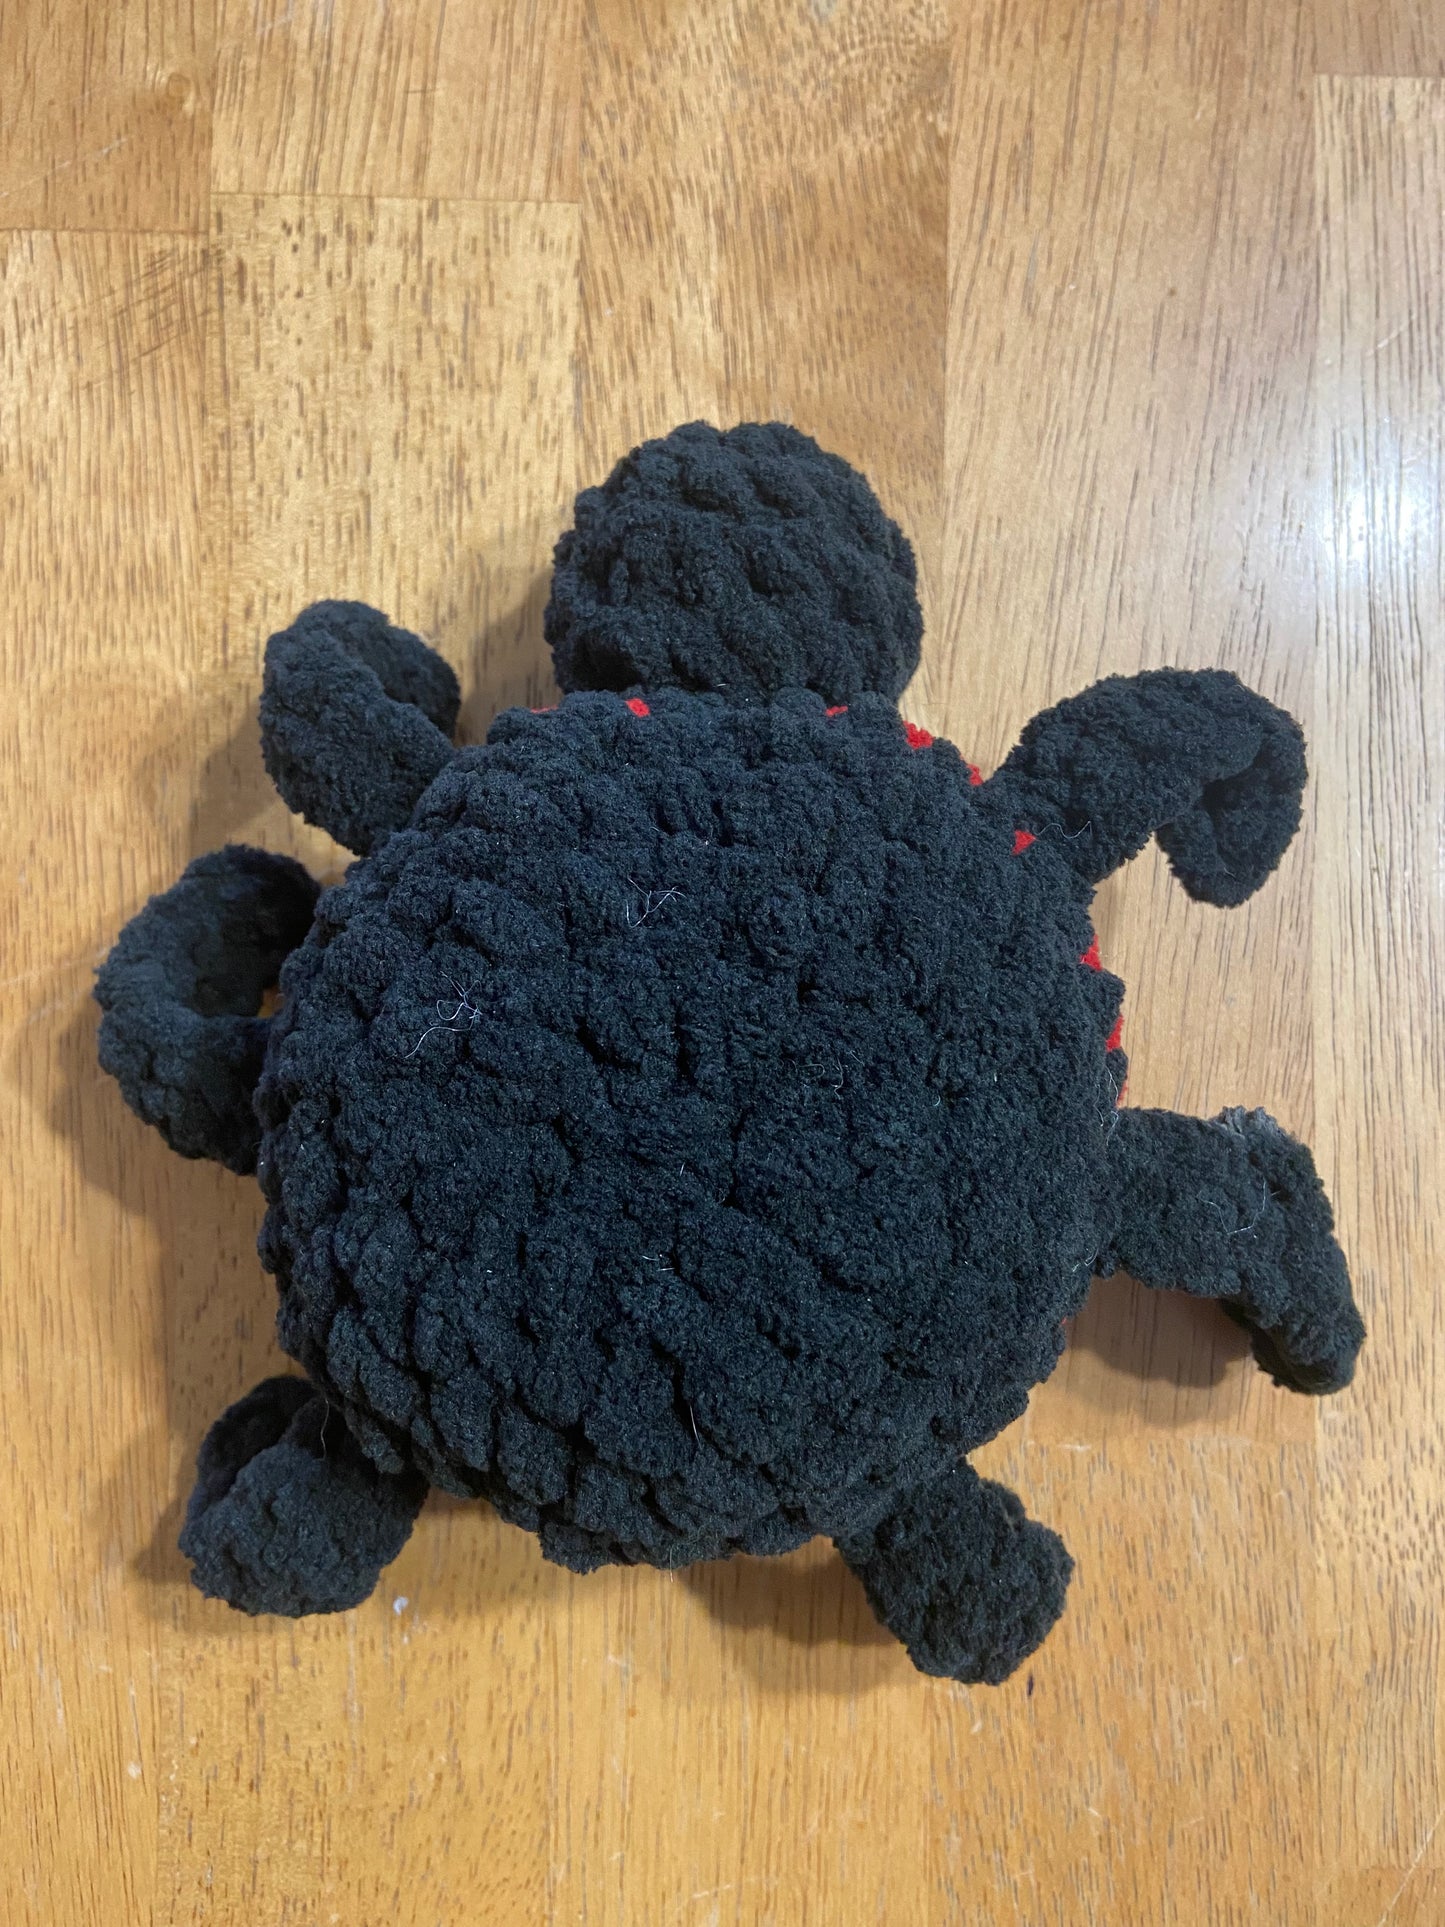 Handmade Crochet Ladybug Plush Toy - Adorable Gift for Kids